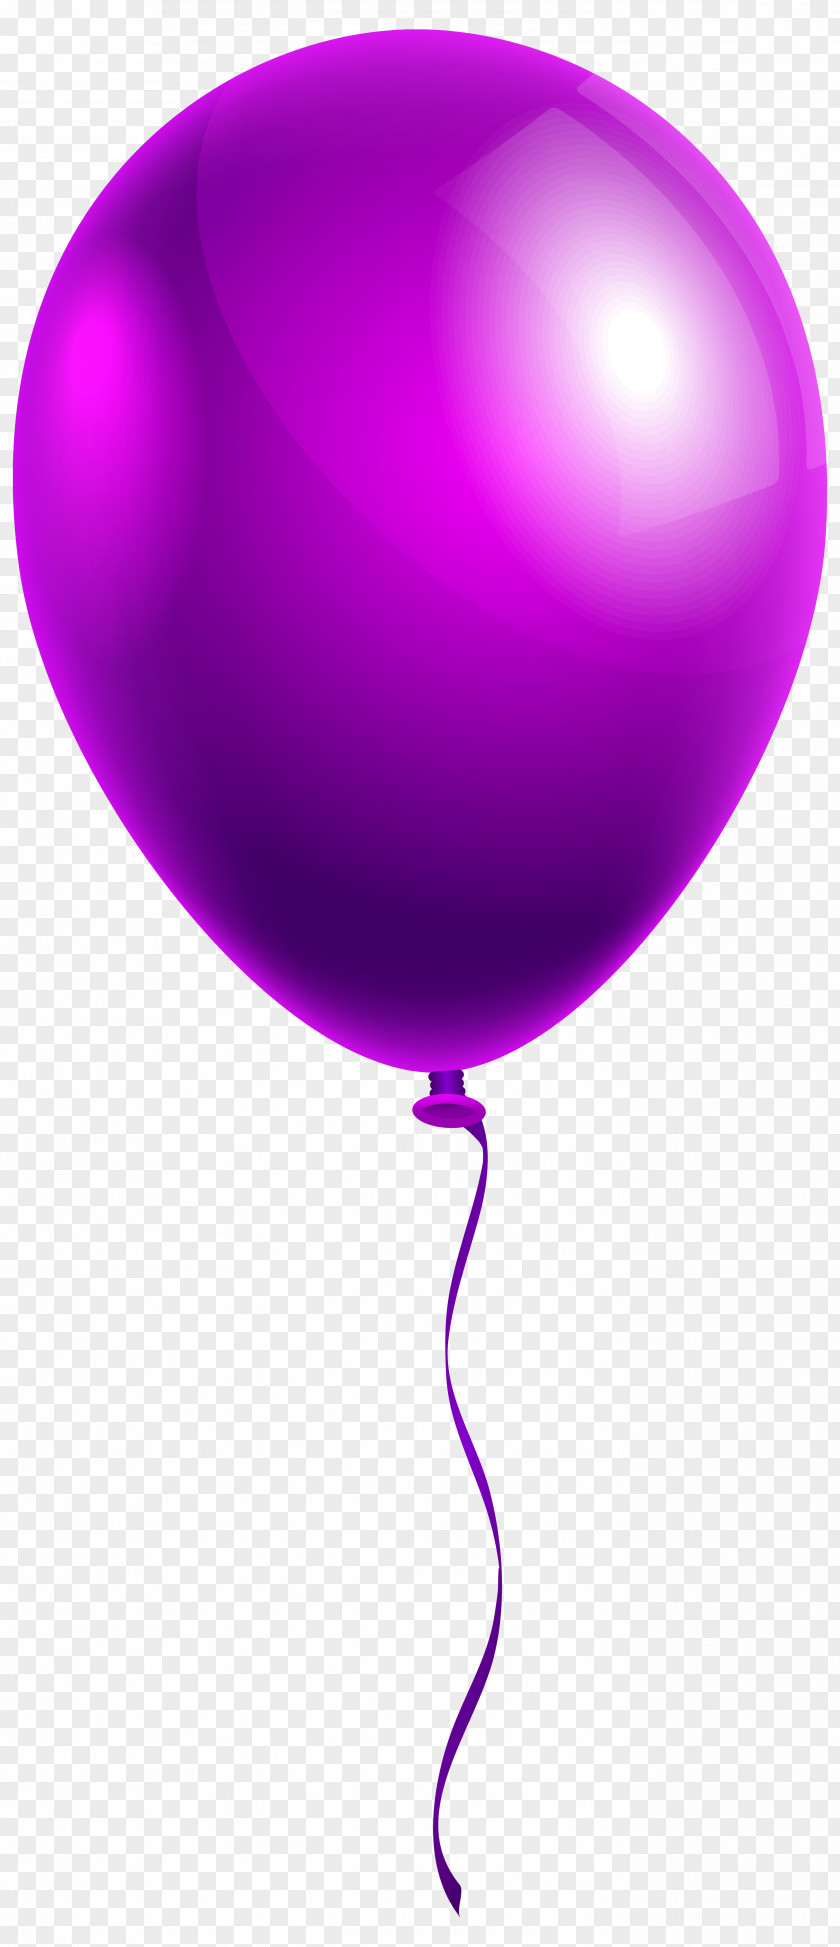 Single Purple Balloon Clipart Image Clip Art PNG